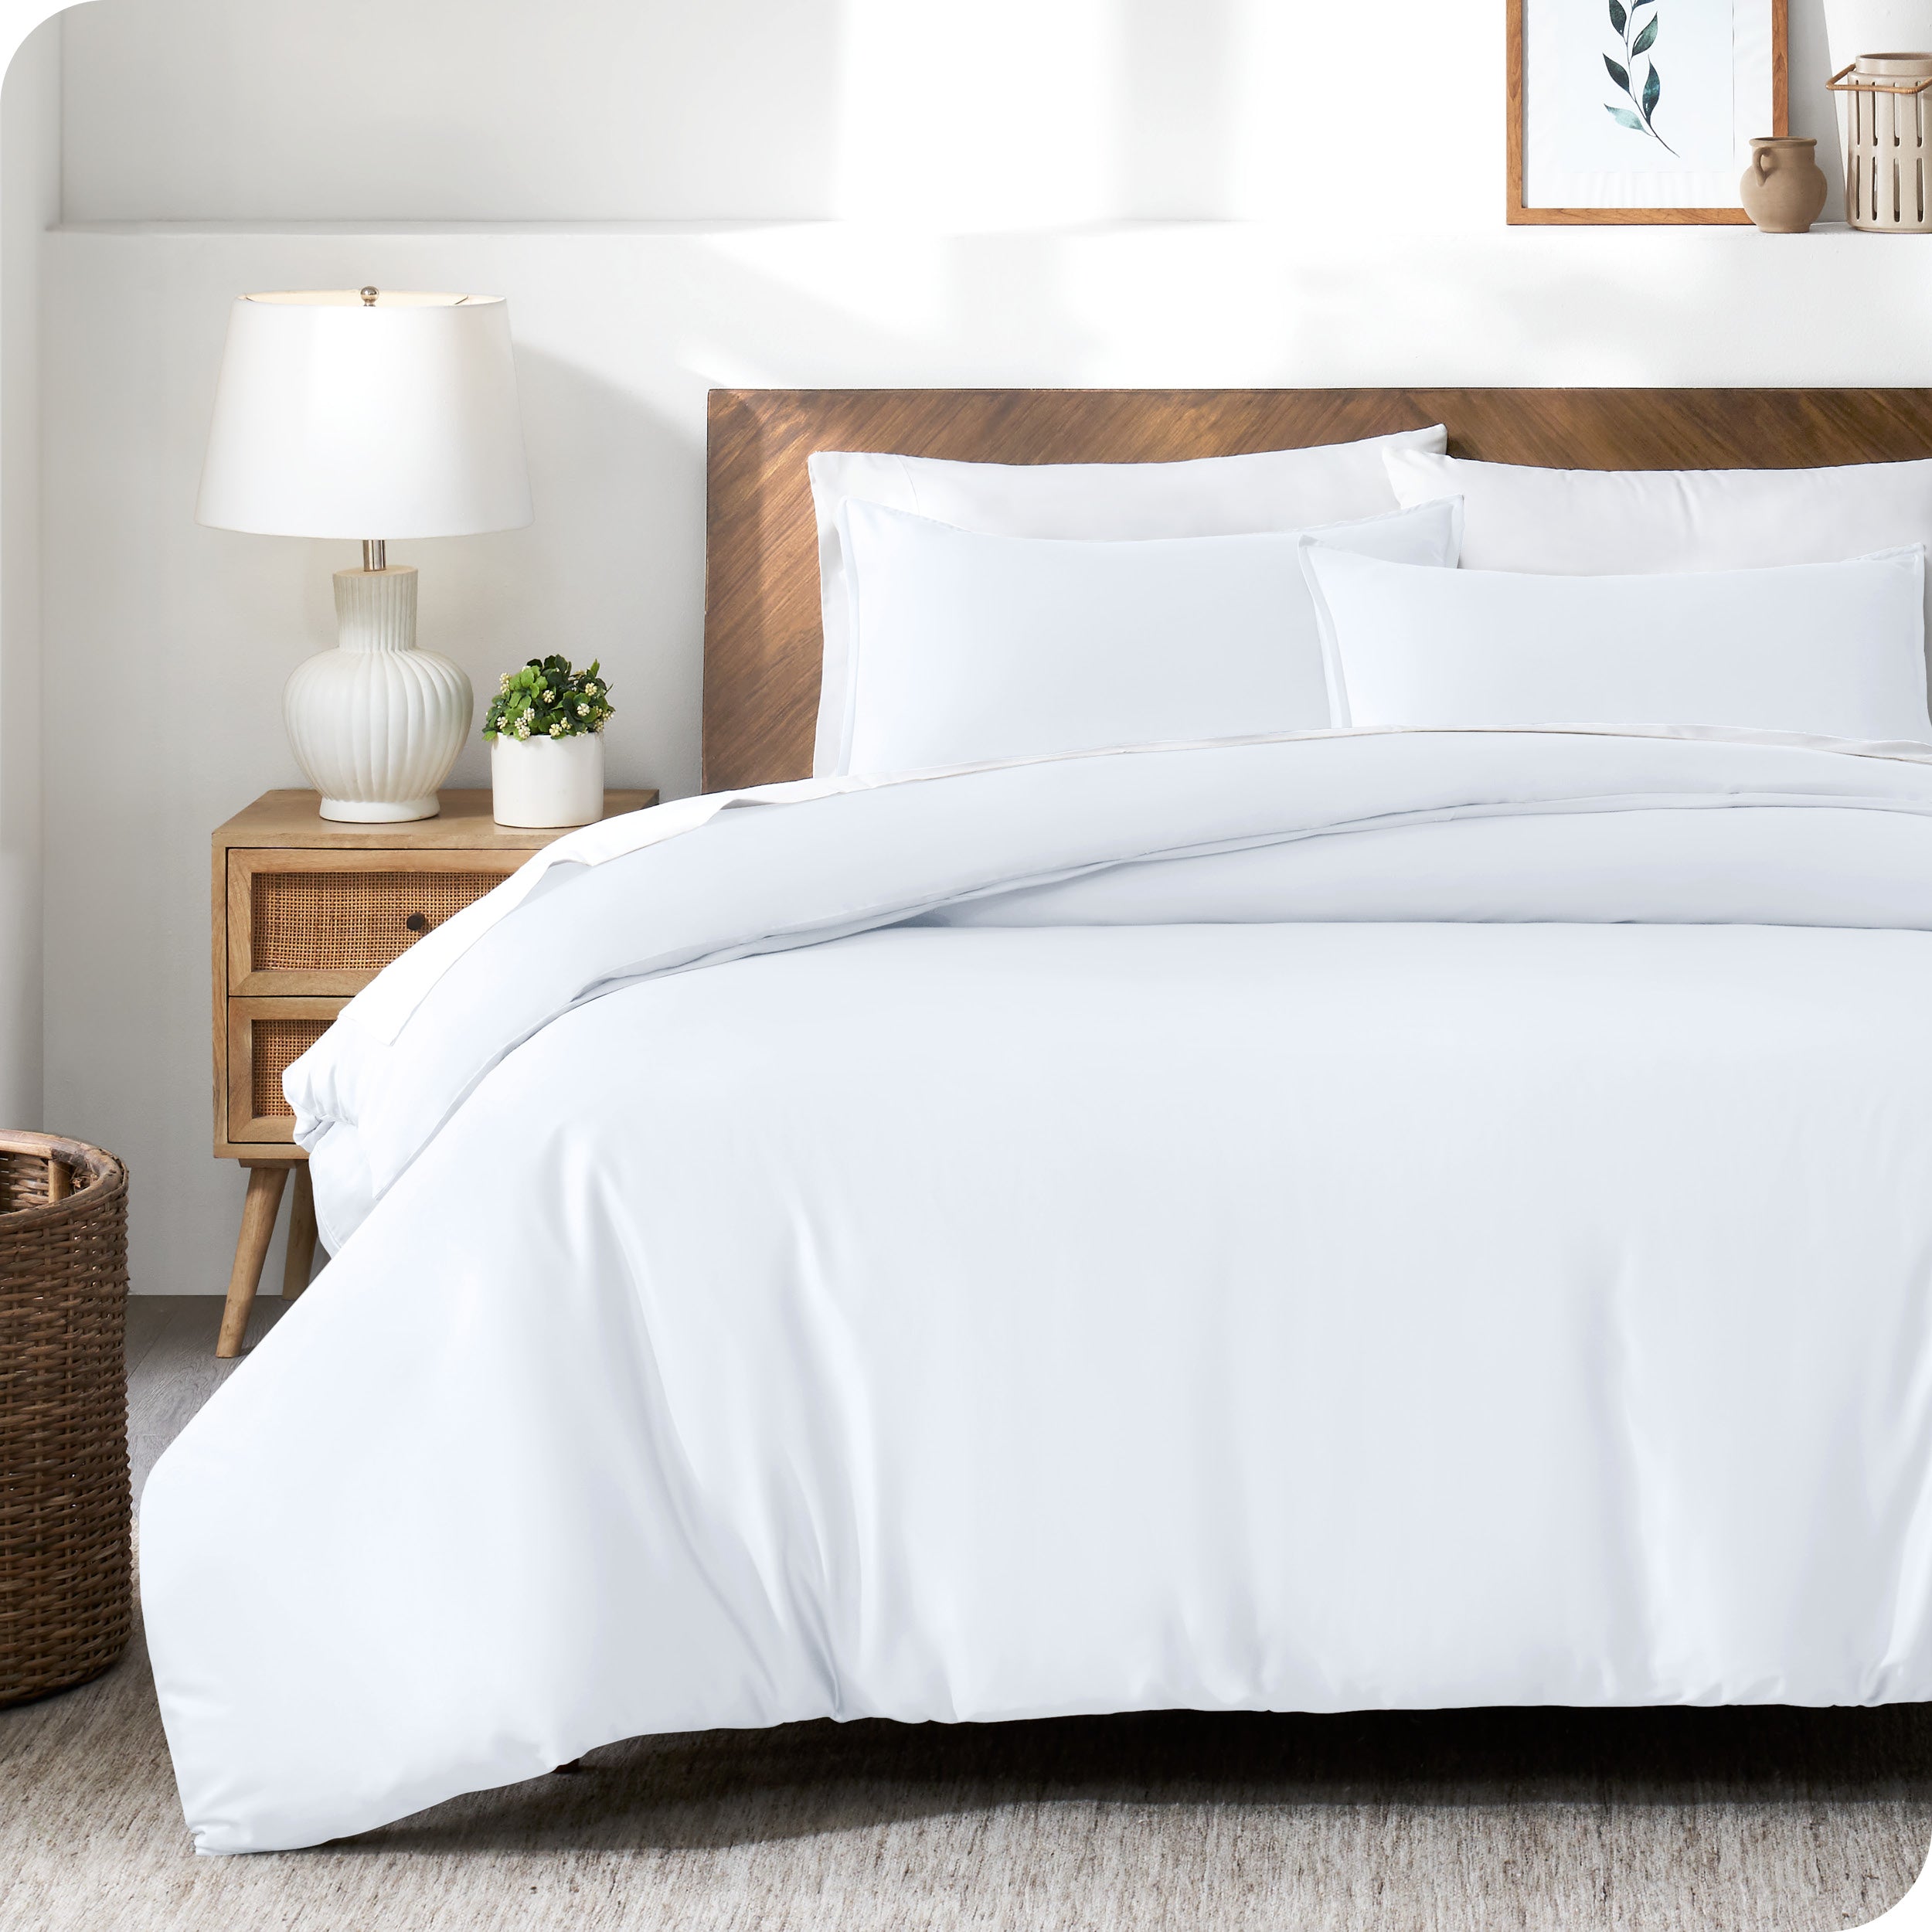 TENCEL™ duvet cover on a mattress in a modern bedroom